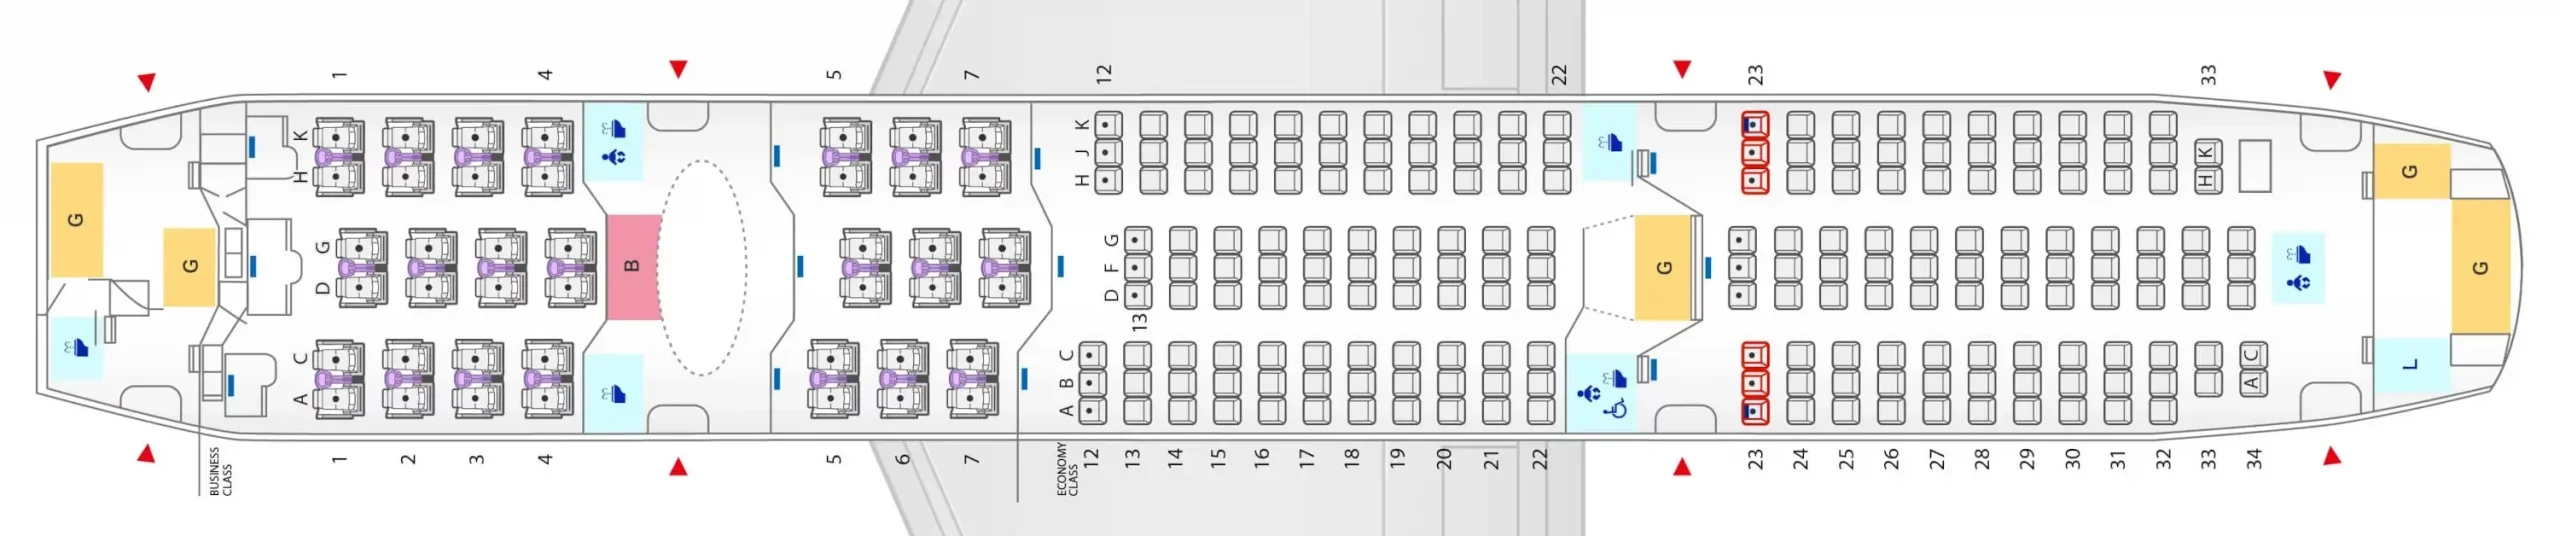 Boeing 787 Seat Map